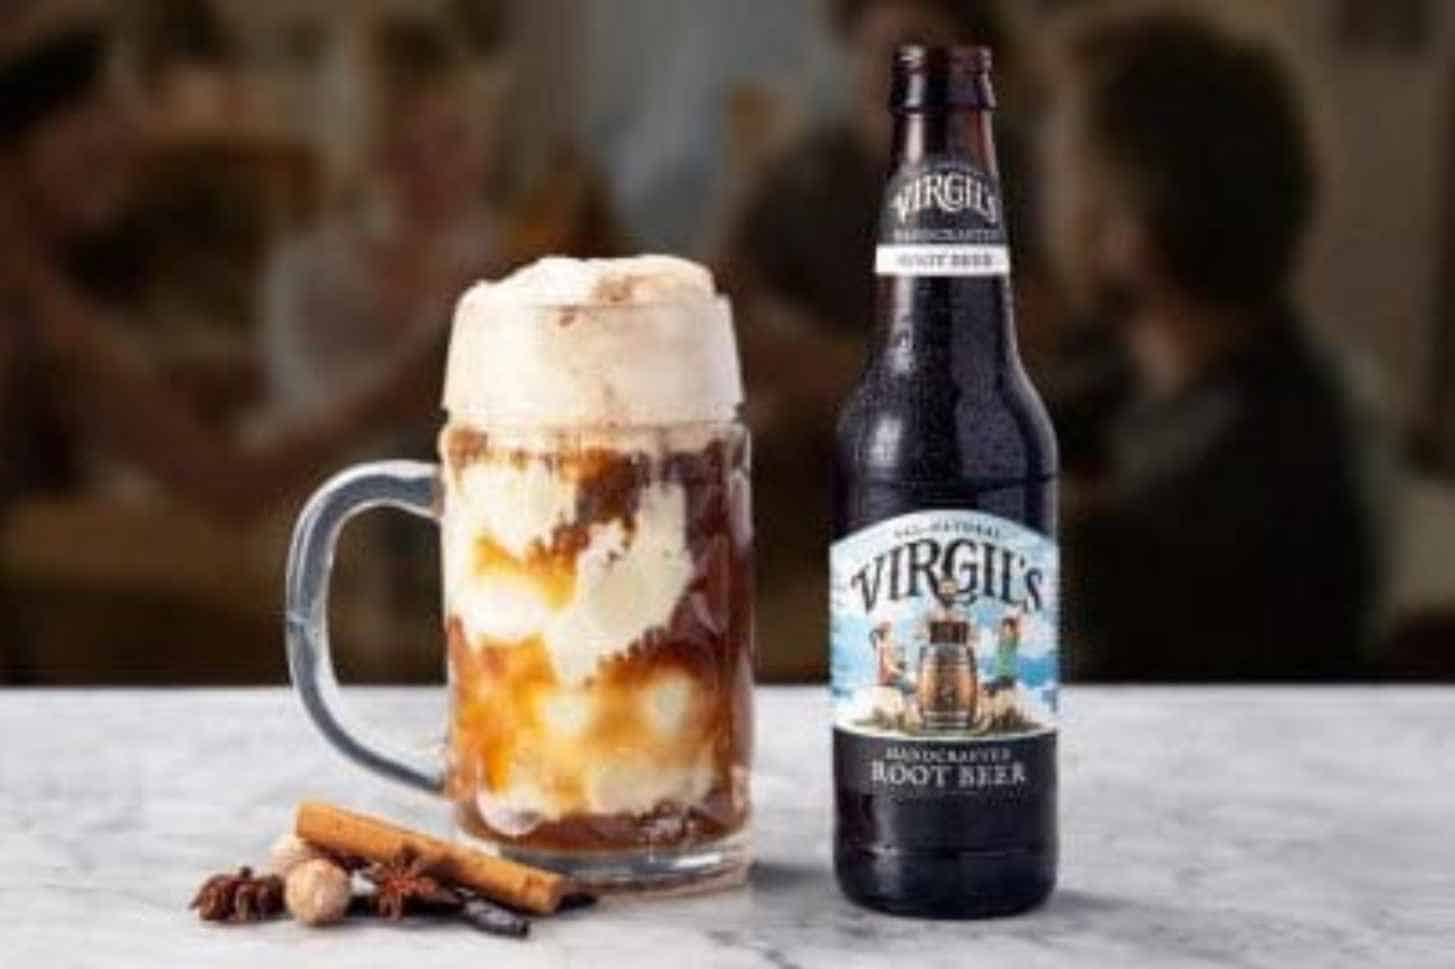 Virgil's Handcrafted Root Beer